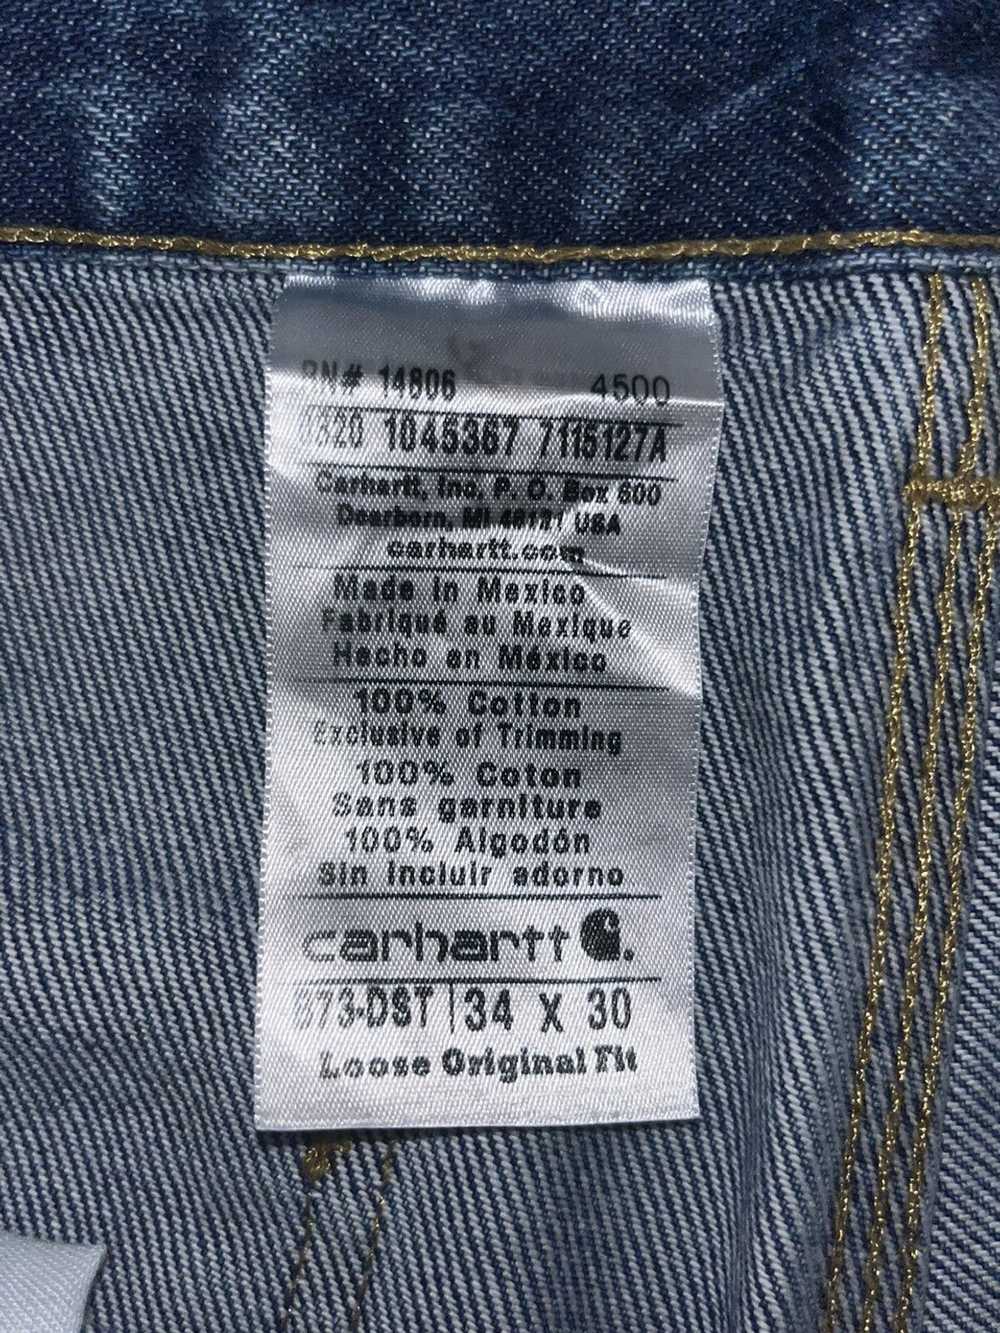 Carhartt Carhartt Double Front Jeans Raw Hem 34x28 - image 6